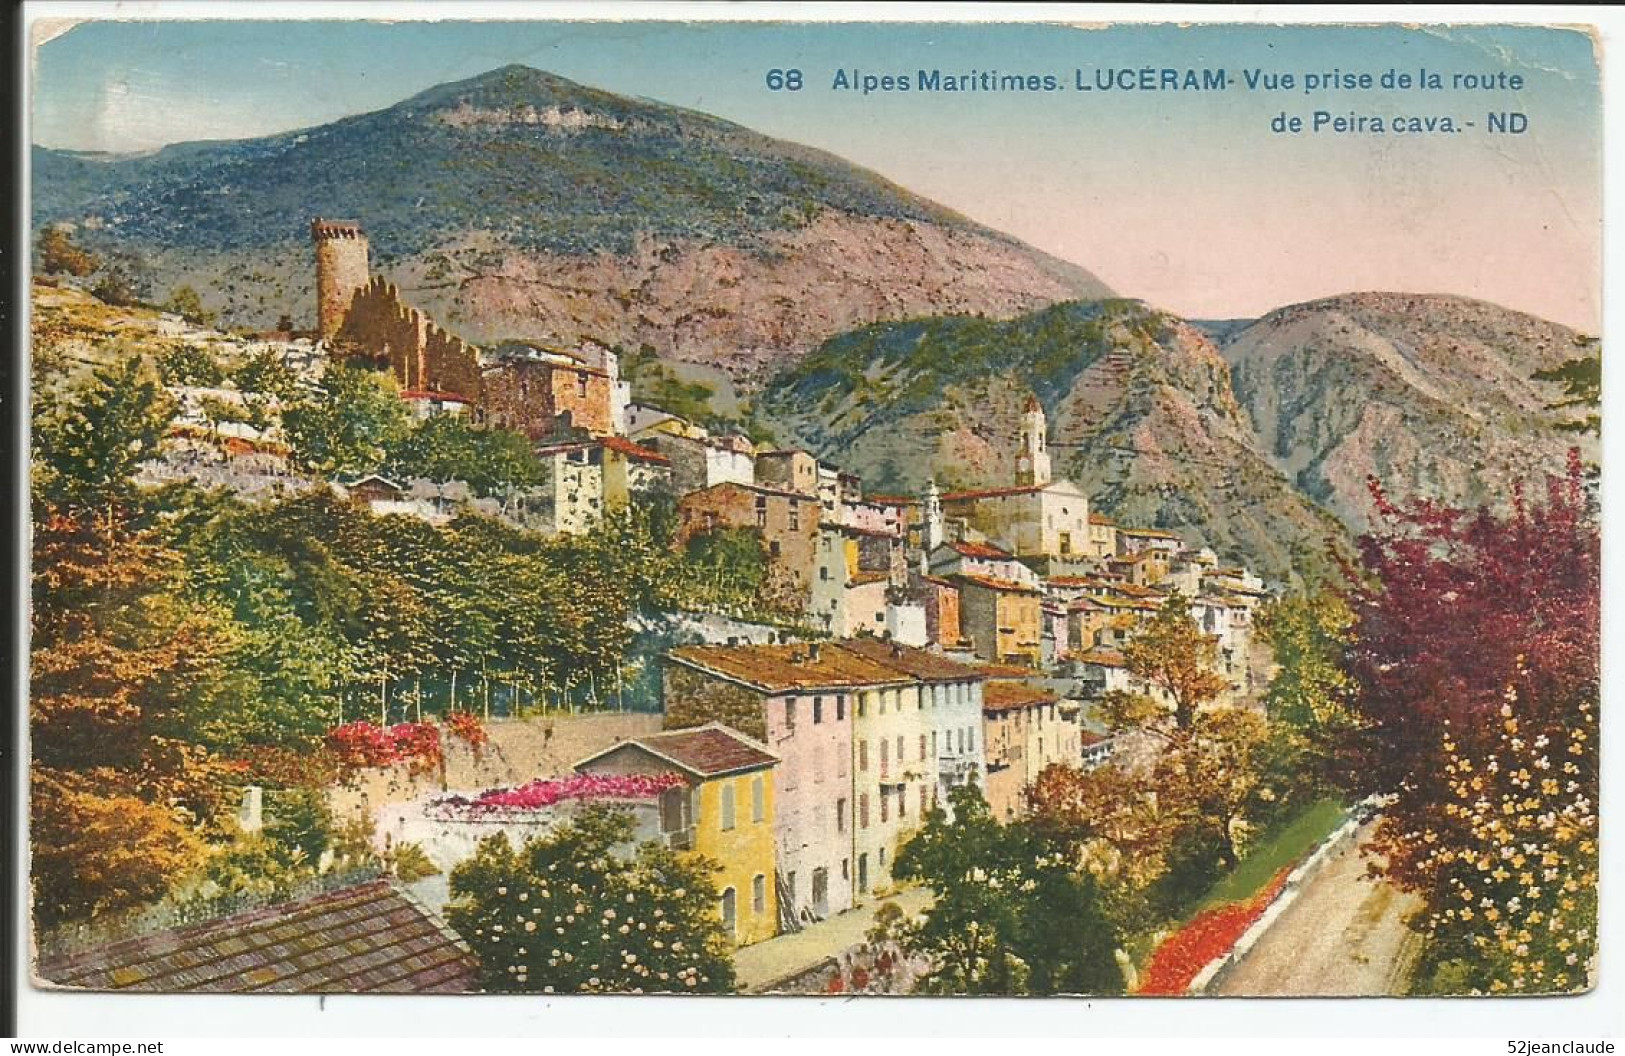 Vue Prise De La Route De Piera Cava 1932 - Lucéram